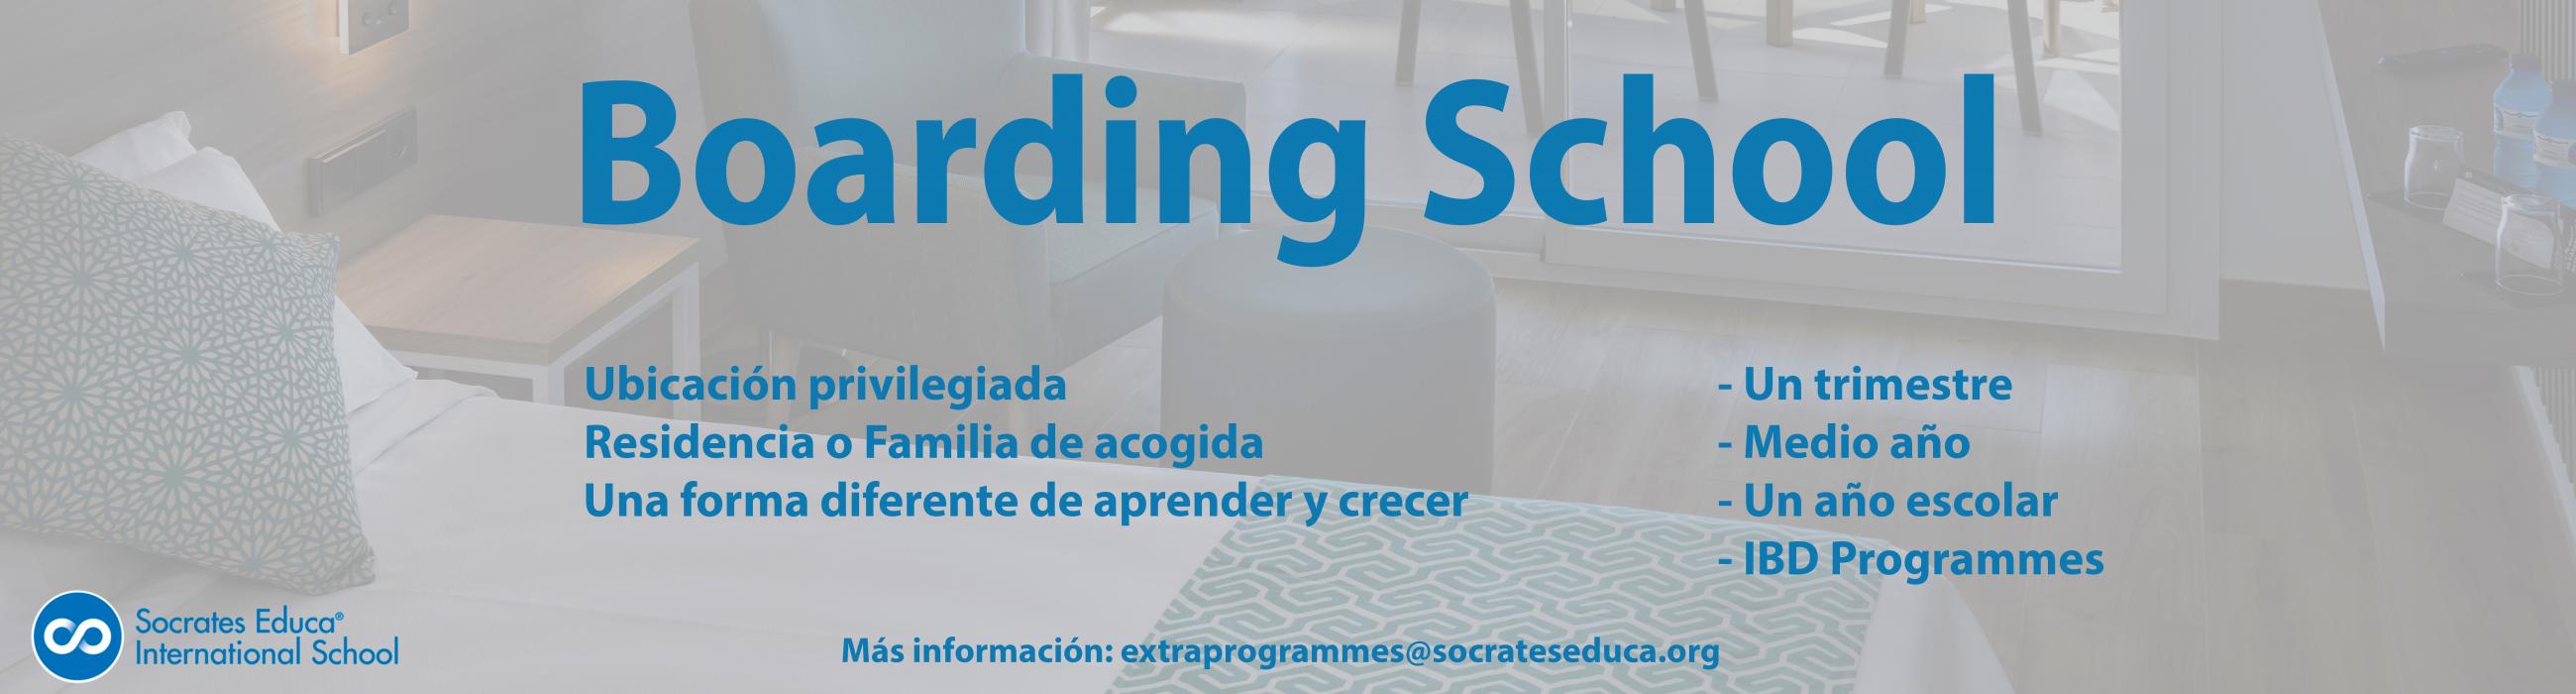 https://socrateseduca.org/es/boarding-school